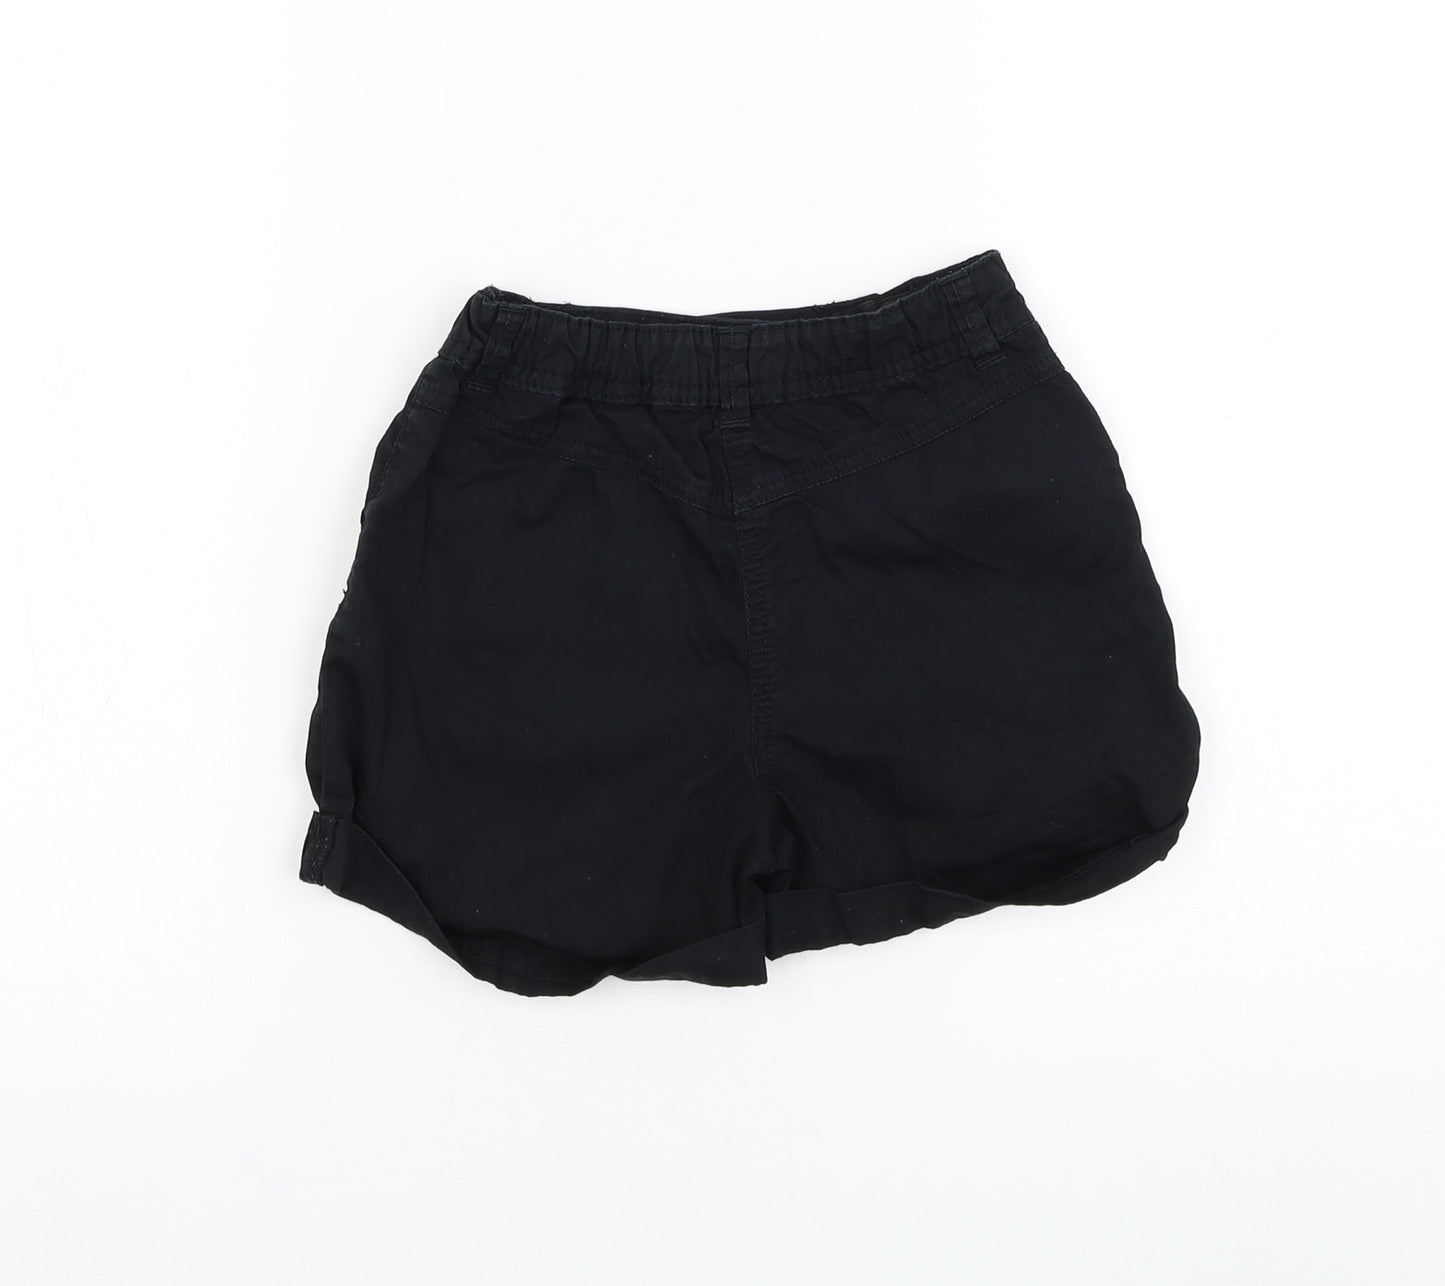 George Girls Black Cotton Bermuda Shorts Size 8-9 Years Regular Buckle